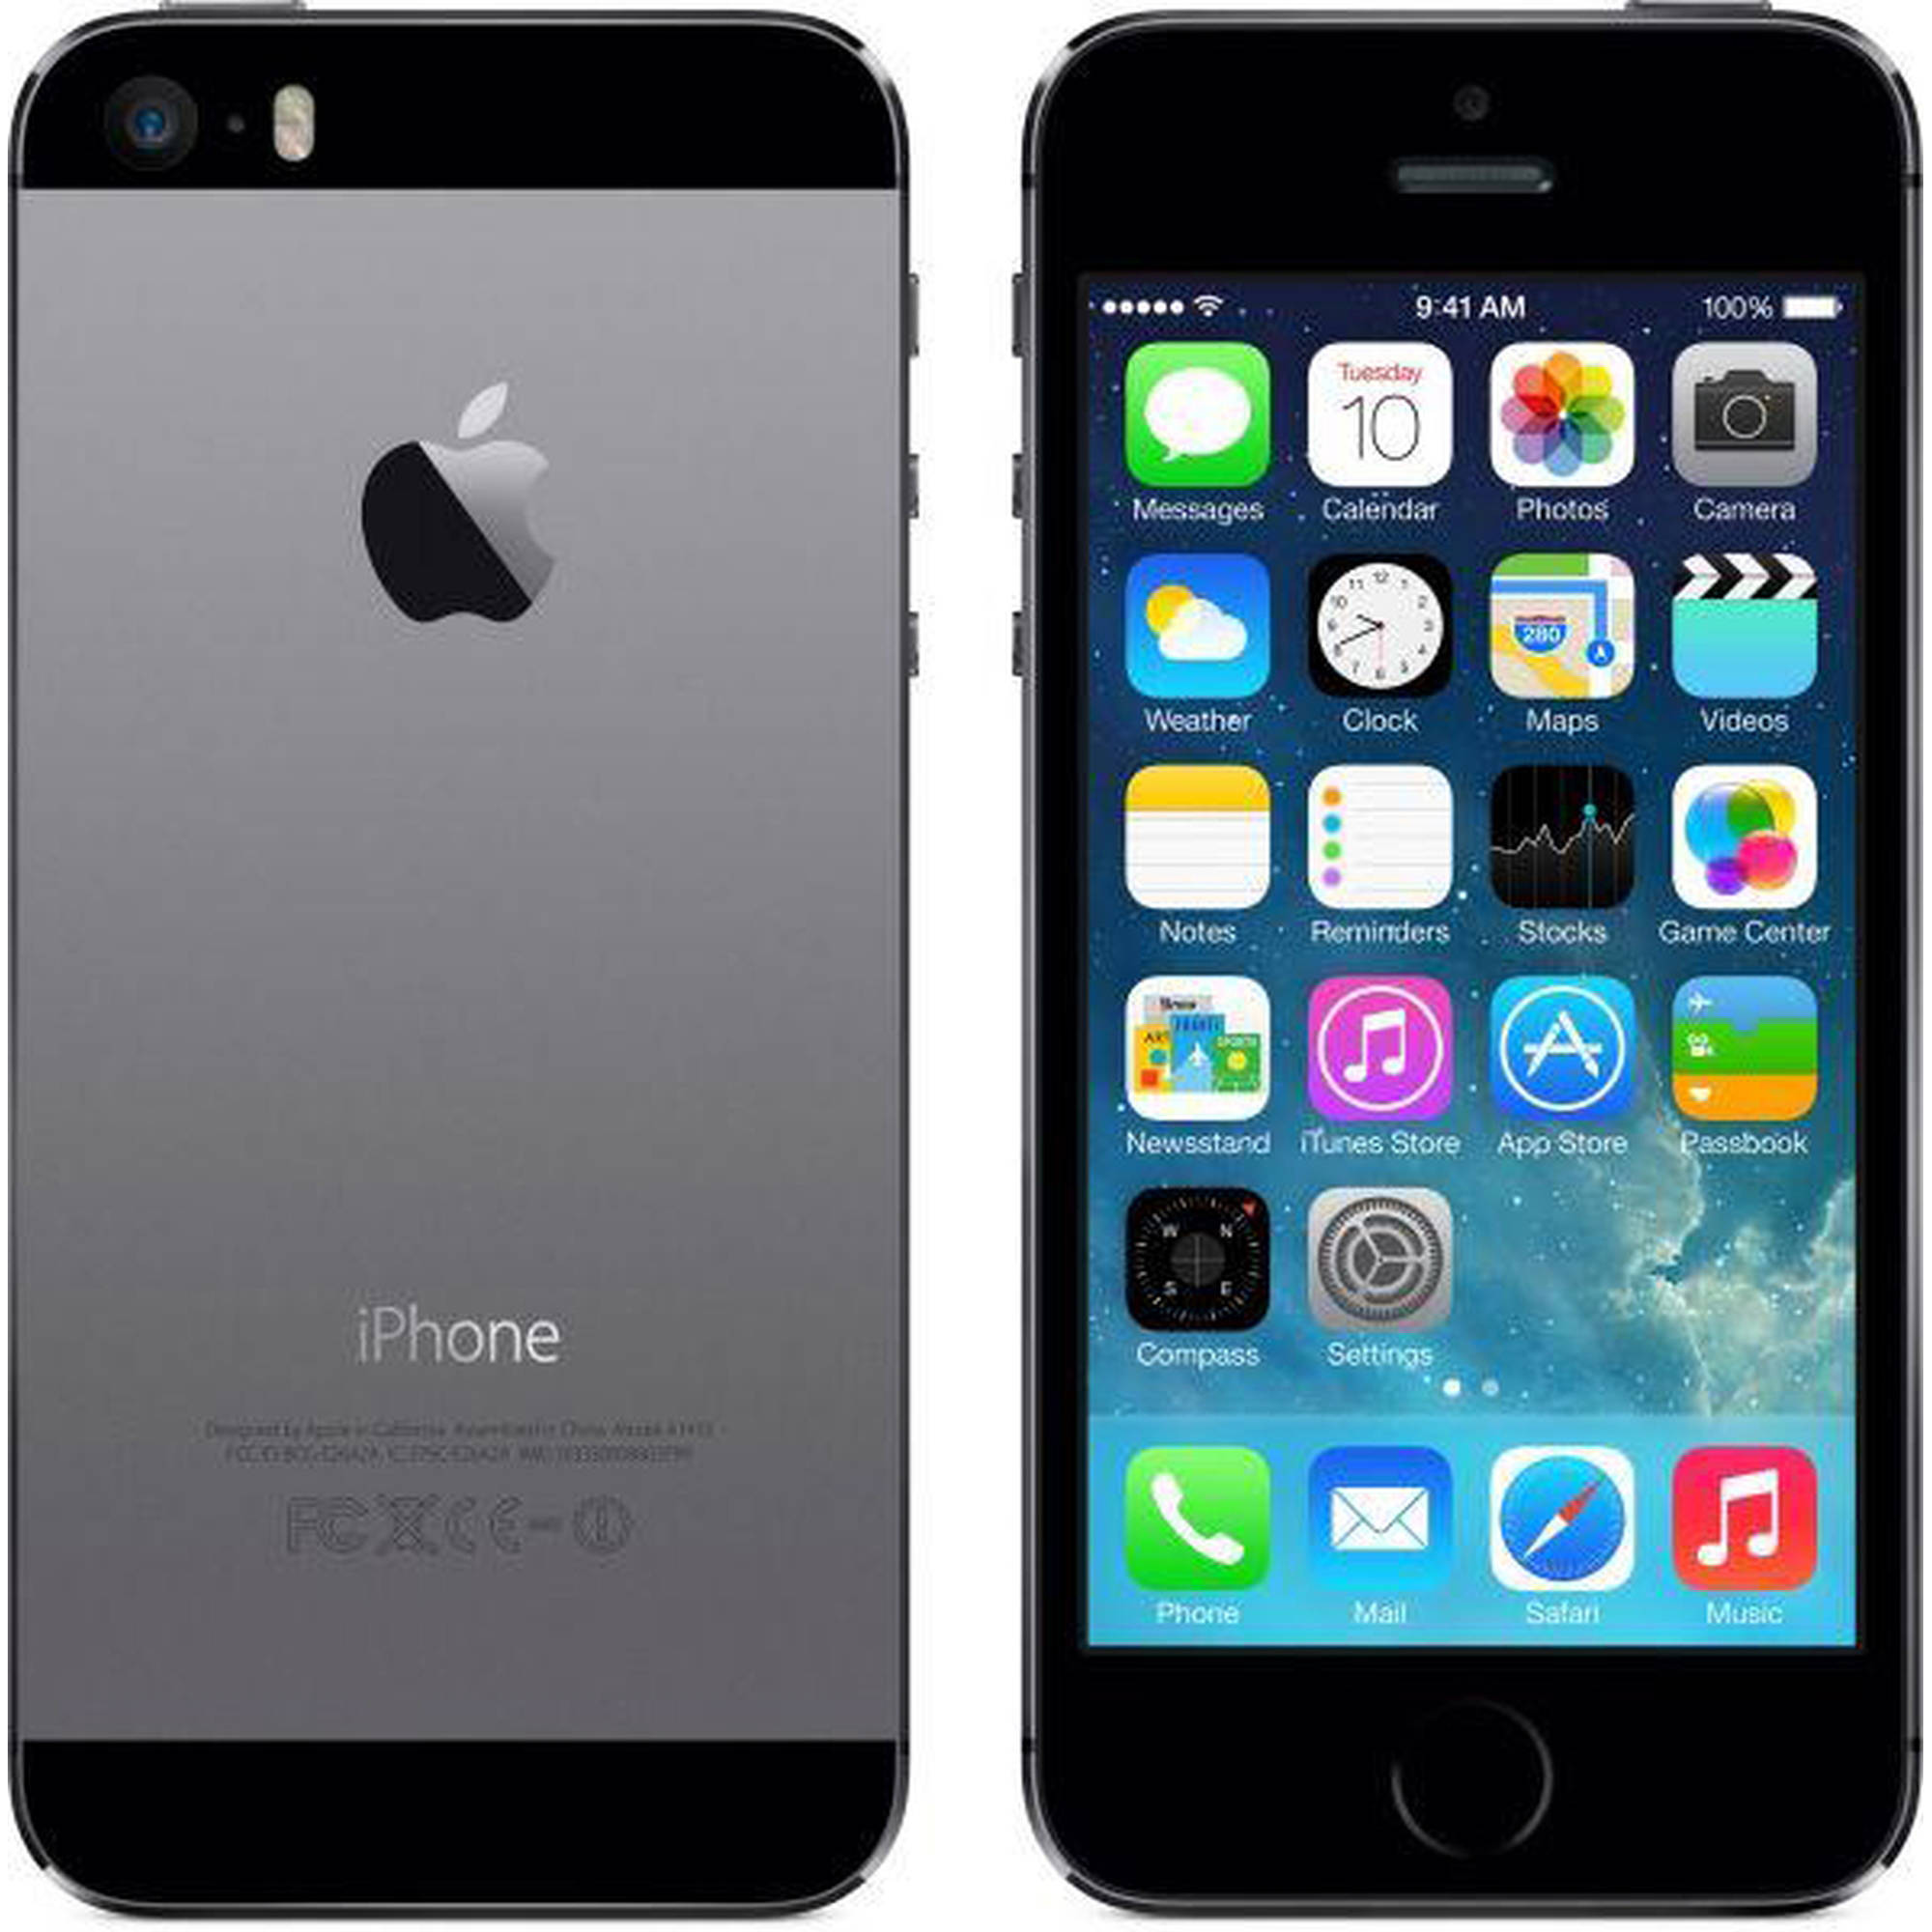 Vorming houten Tranen Images of Unreleased iPhone 5s in Black and Slate Shared Online - MacRumors